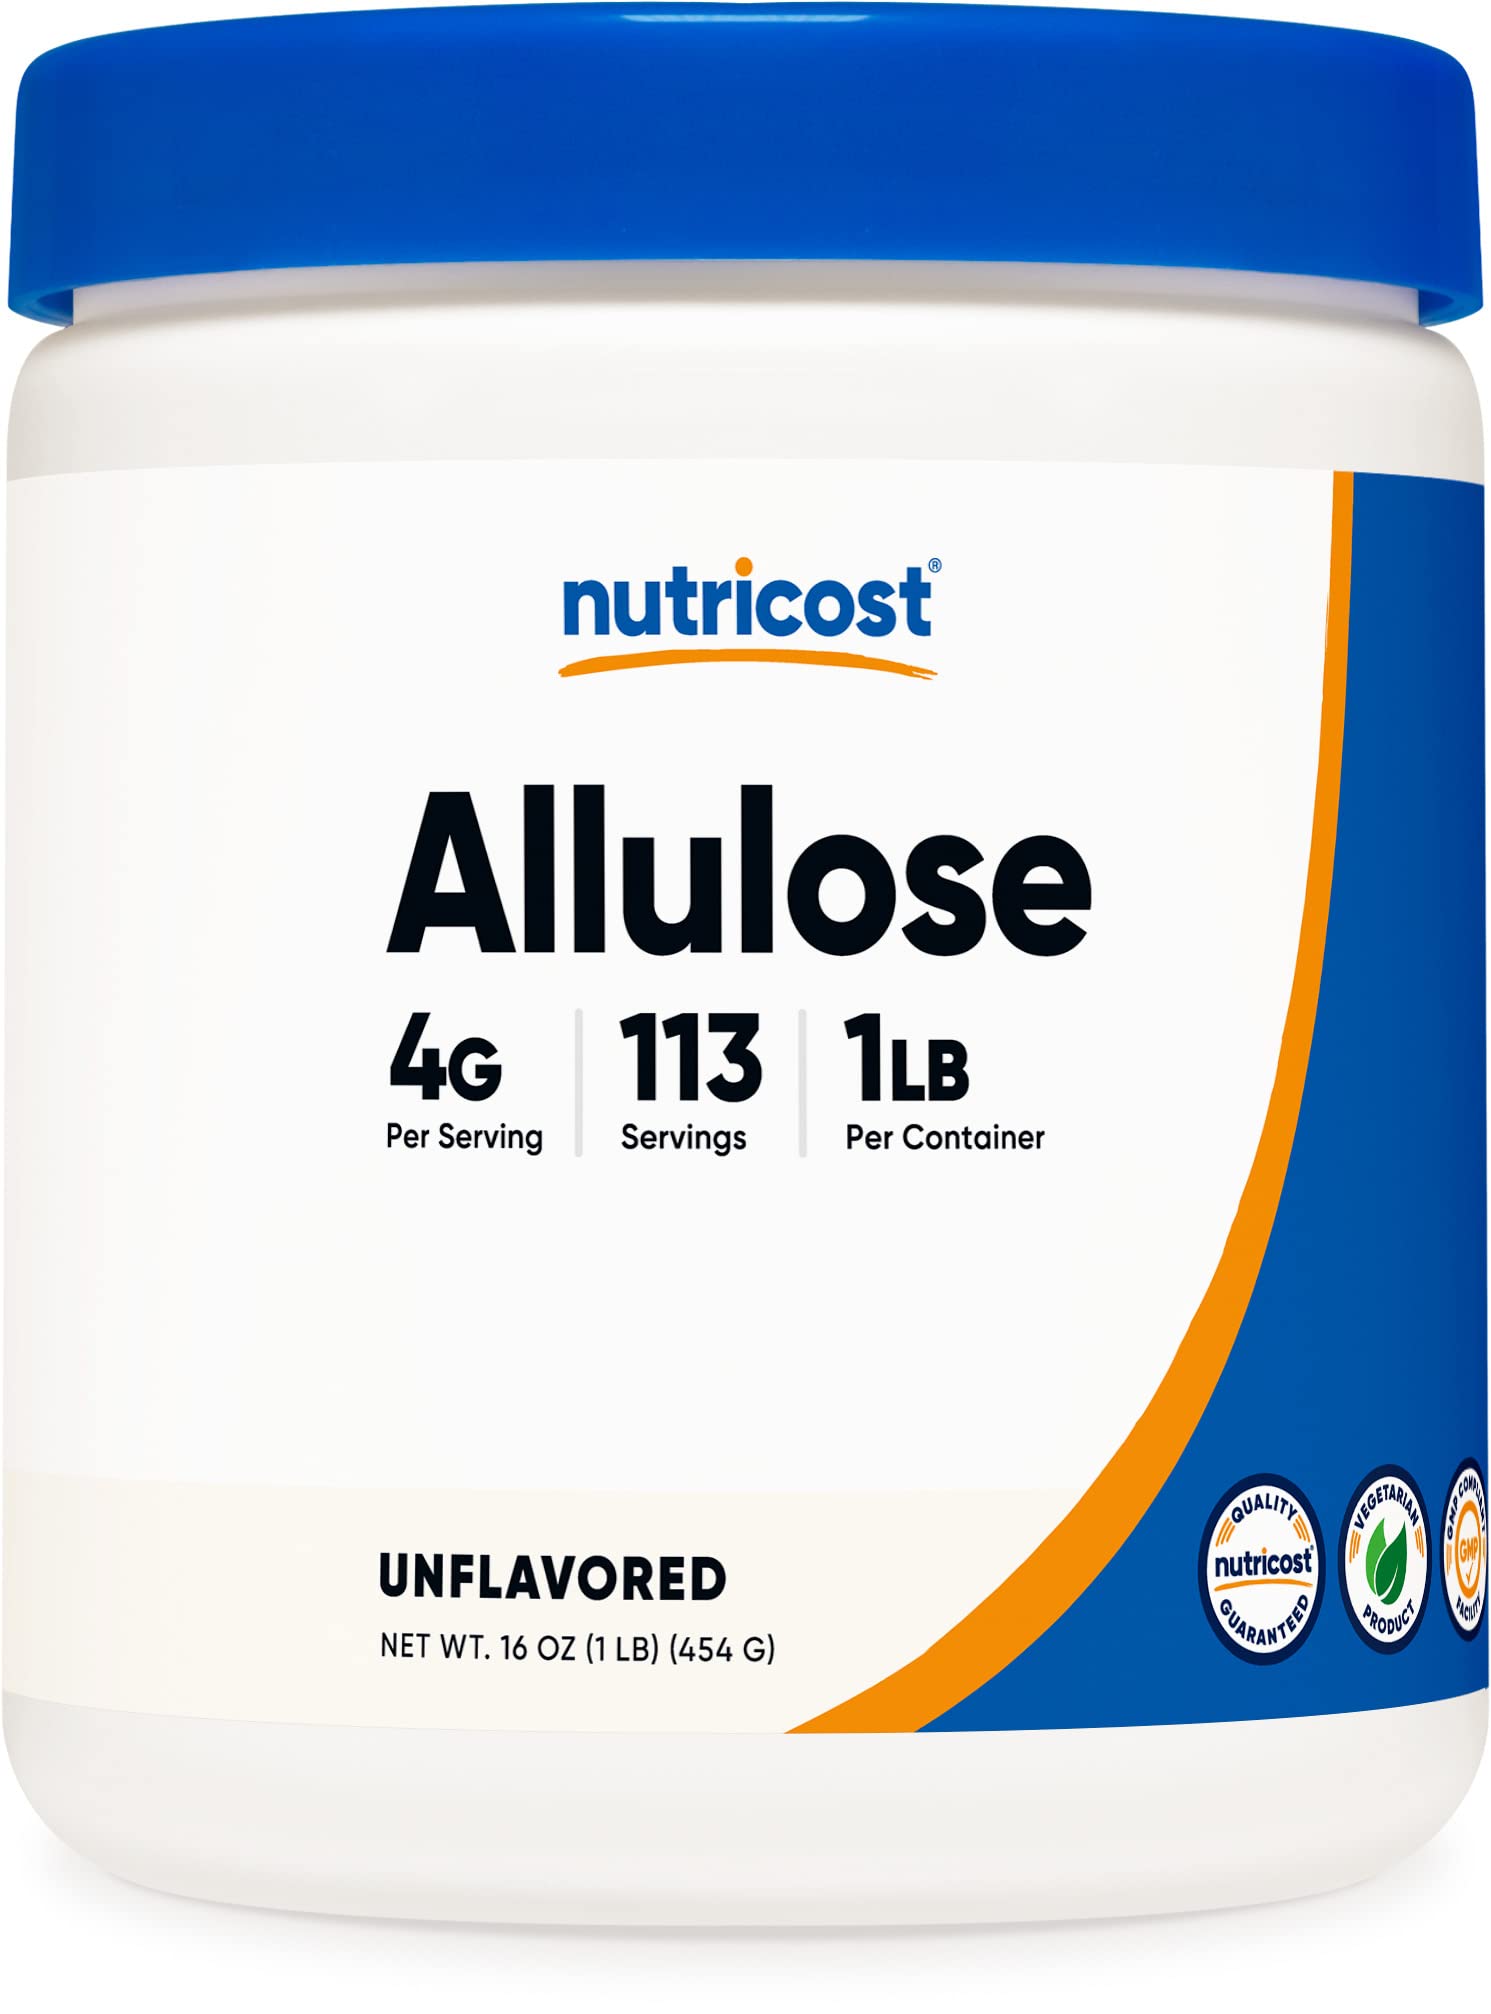 Nutricost Allulose Sweetener Powder